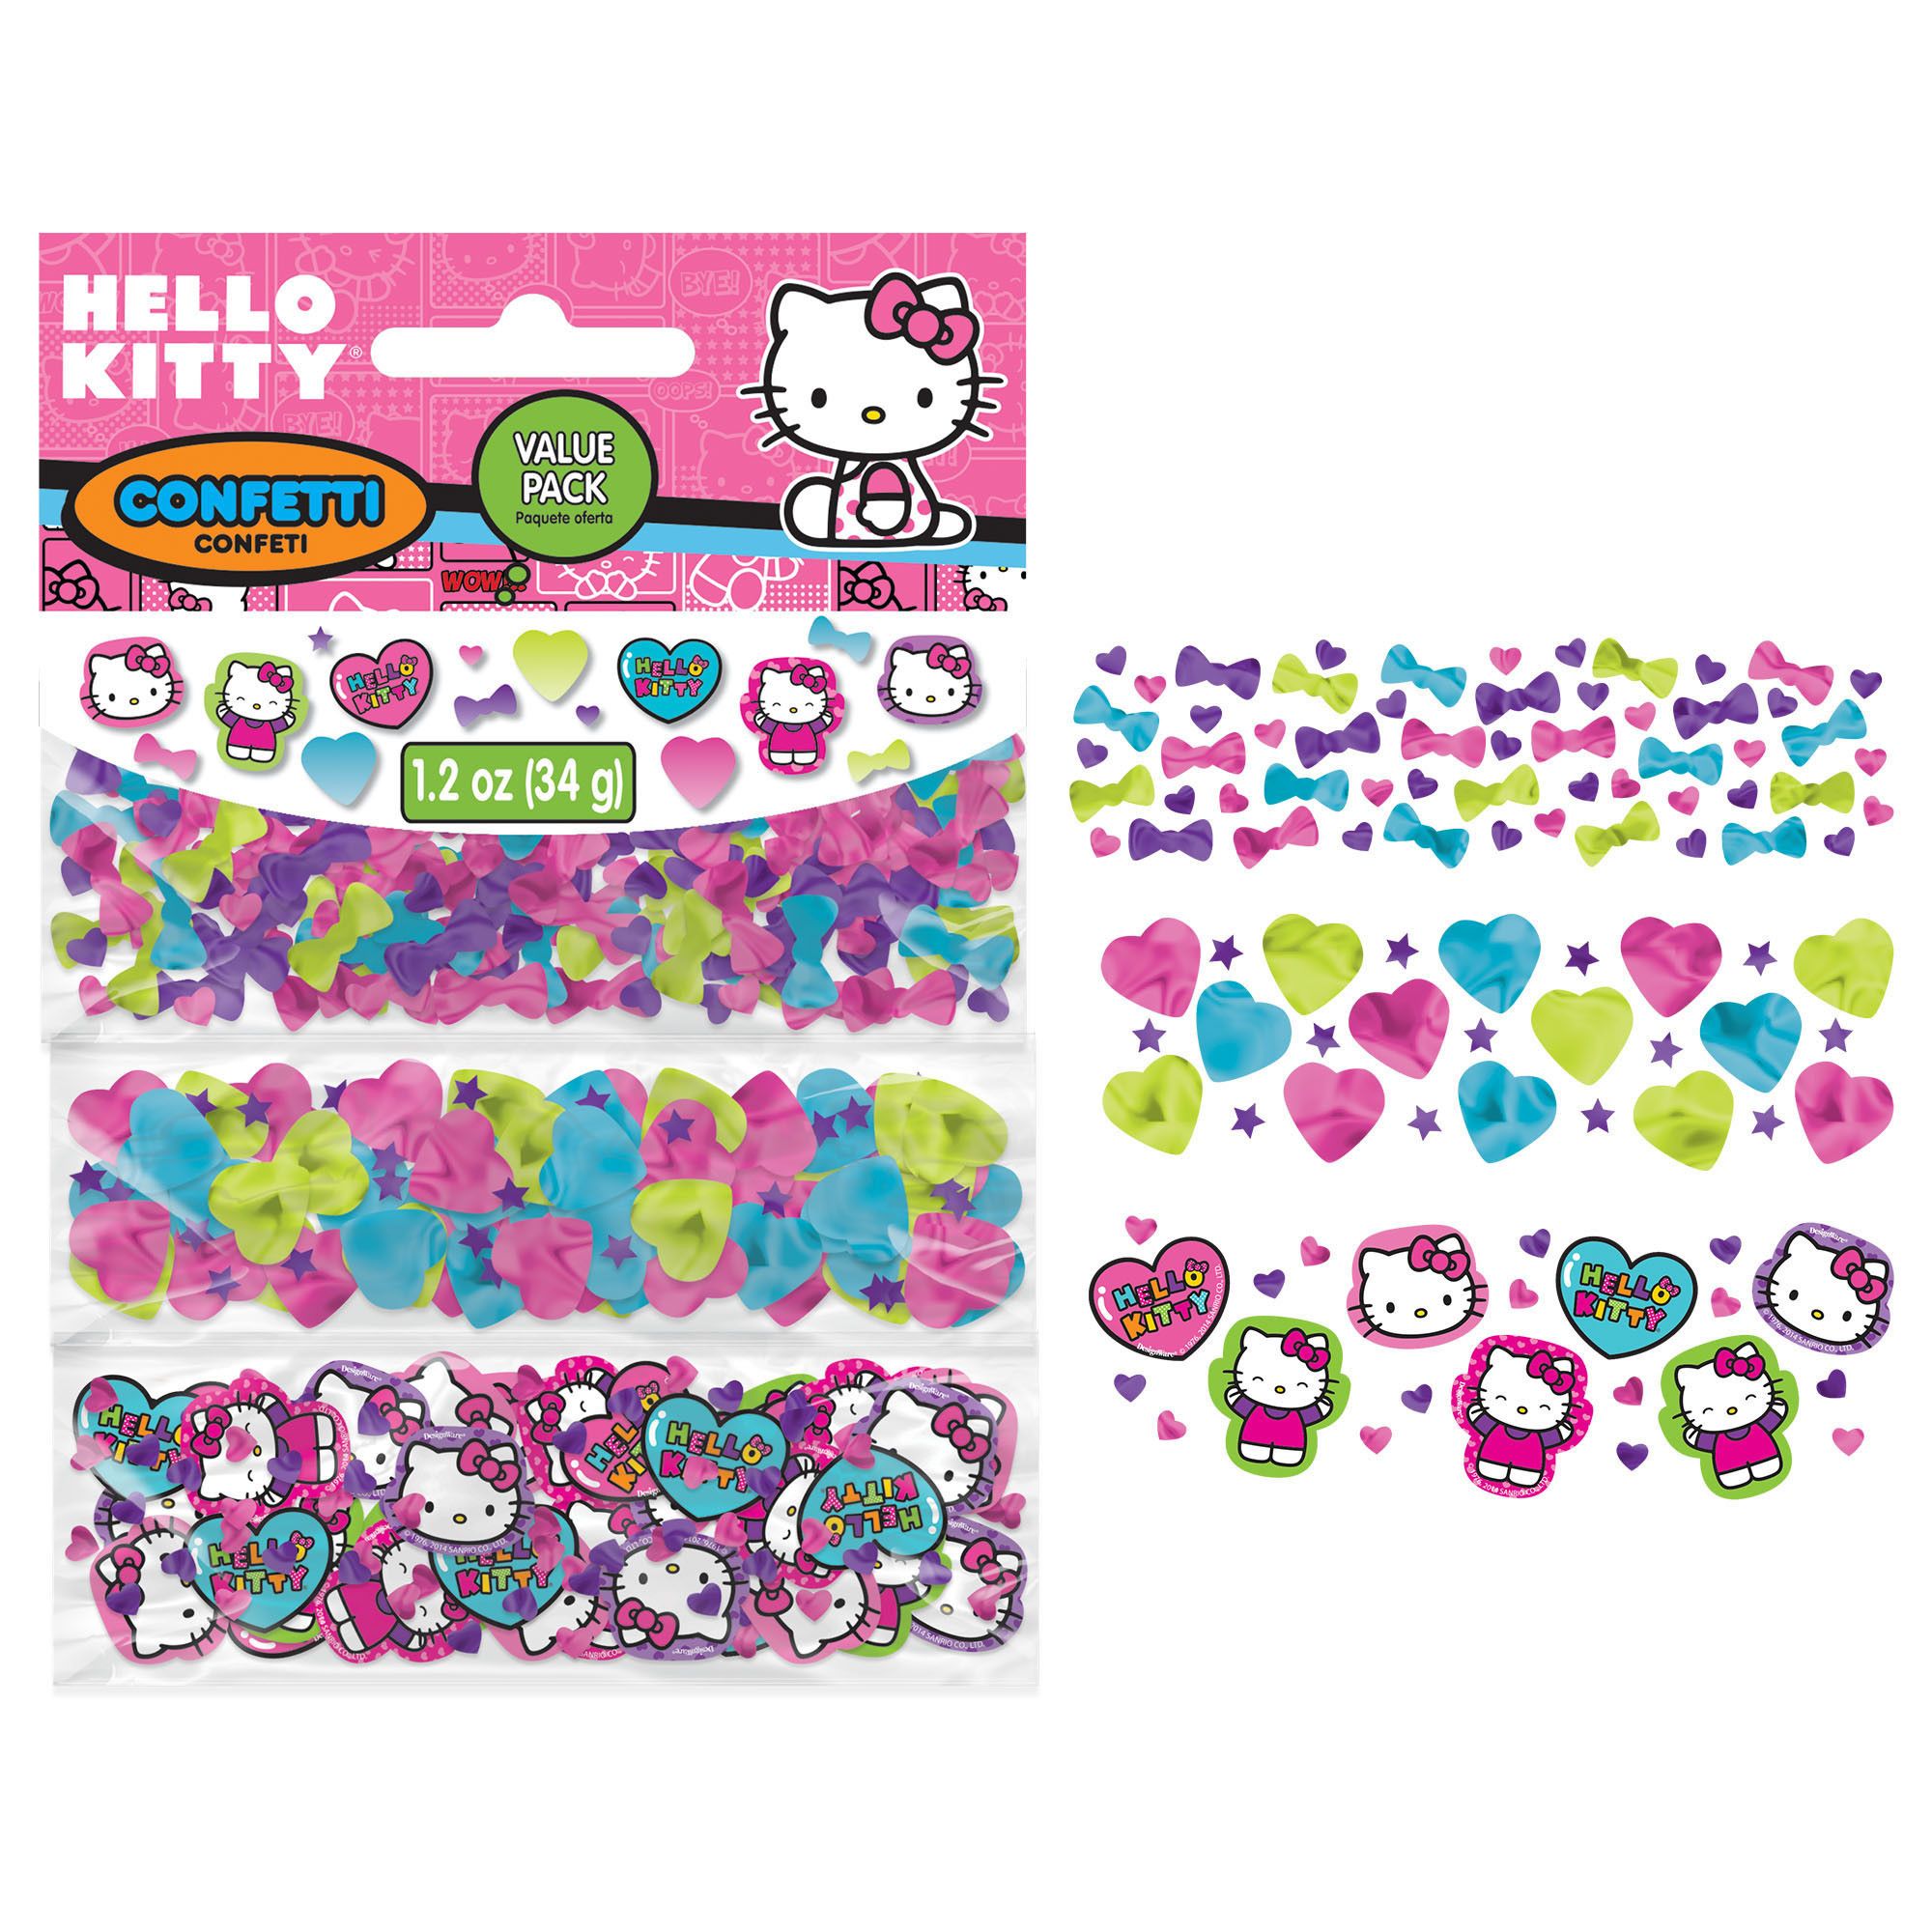 Hello Kitty Rainbow Party Supplies Confetti 1.2 oz. 